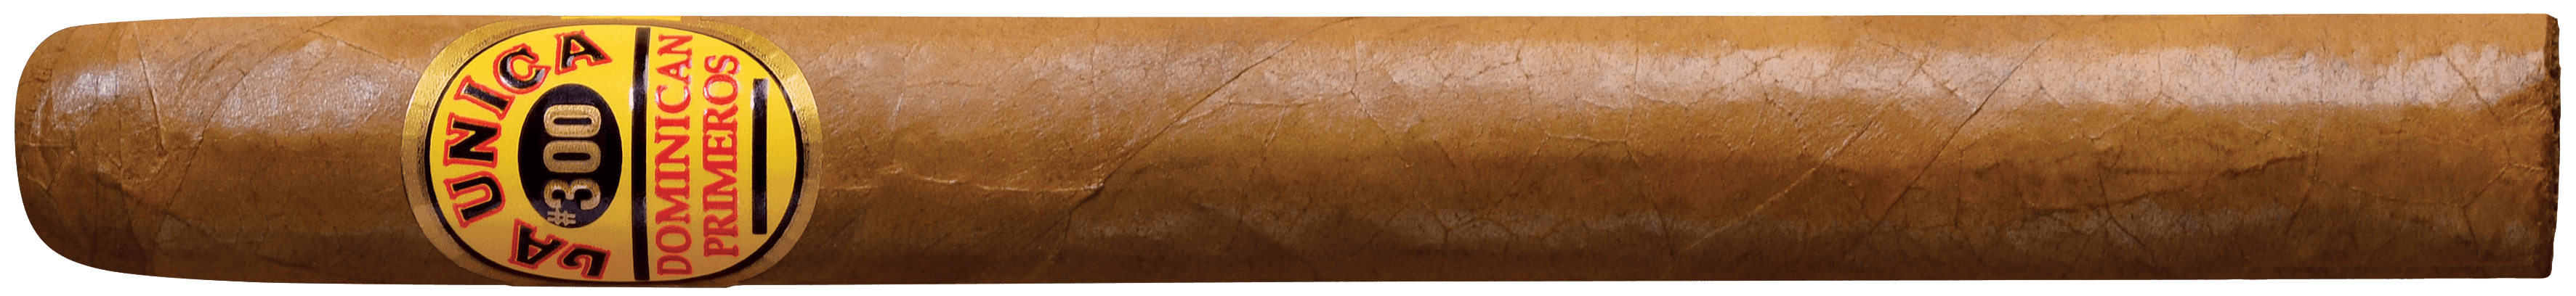 La Unica Number 300 Cigar Single